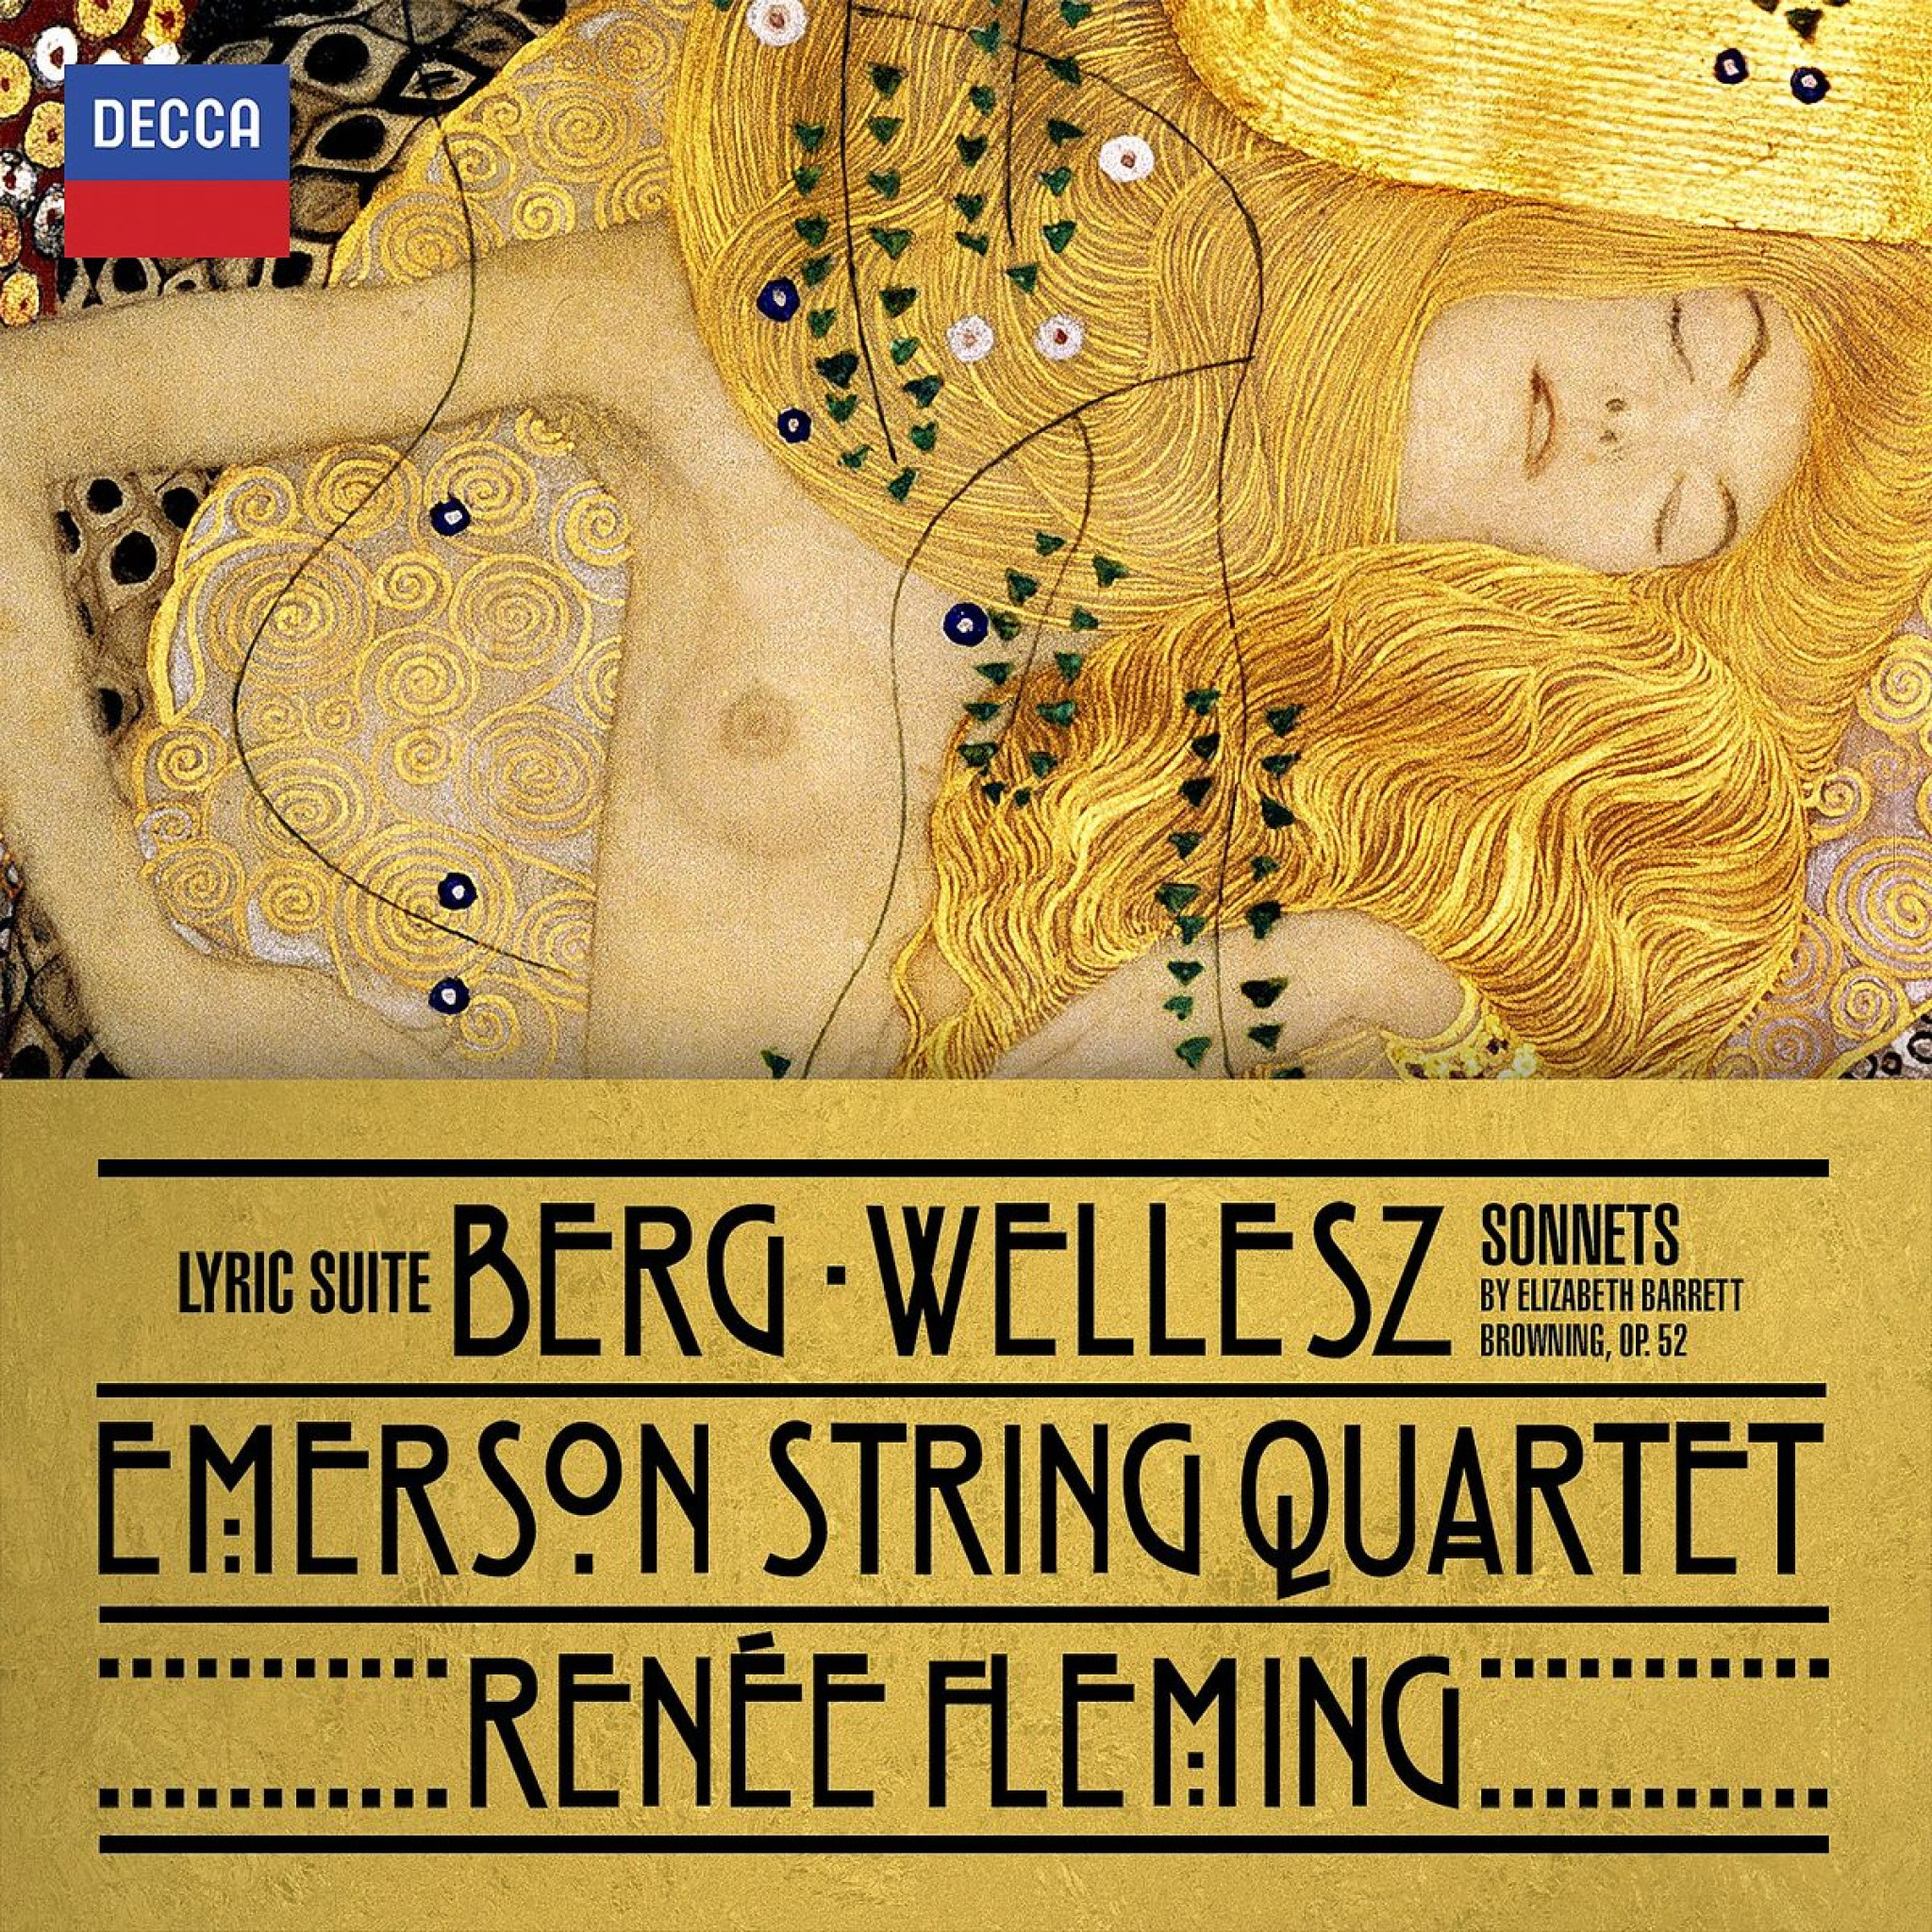 BERG,  WELLESZ Fleming, Emerson String Quartet